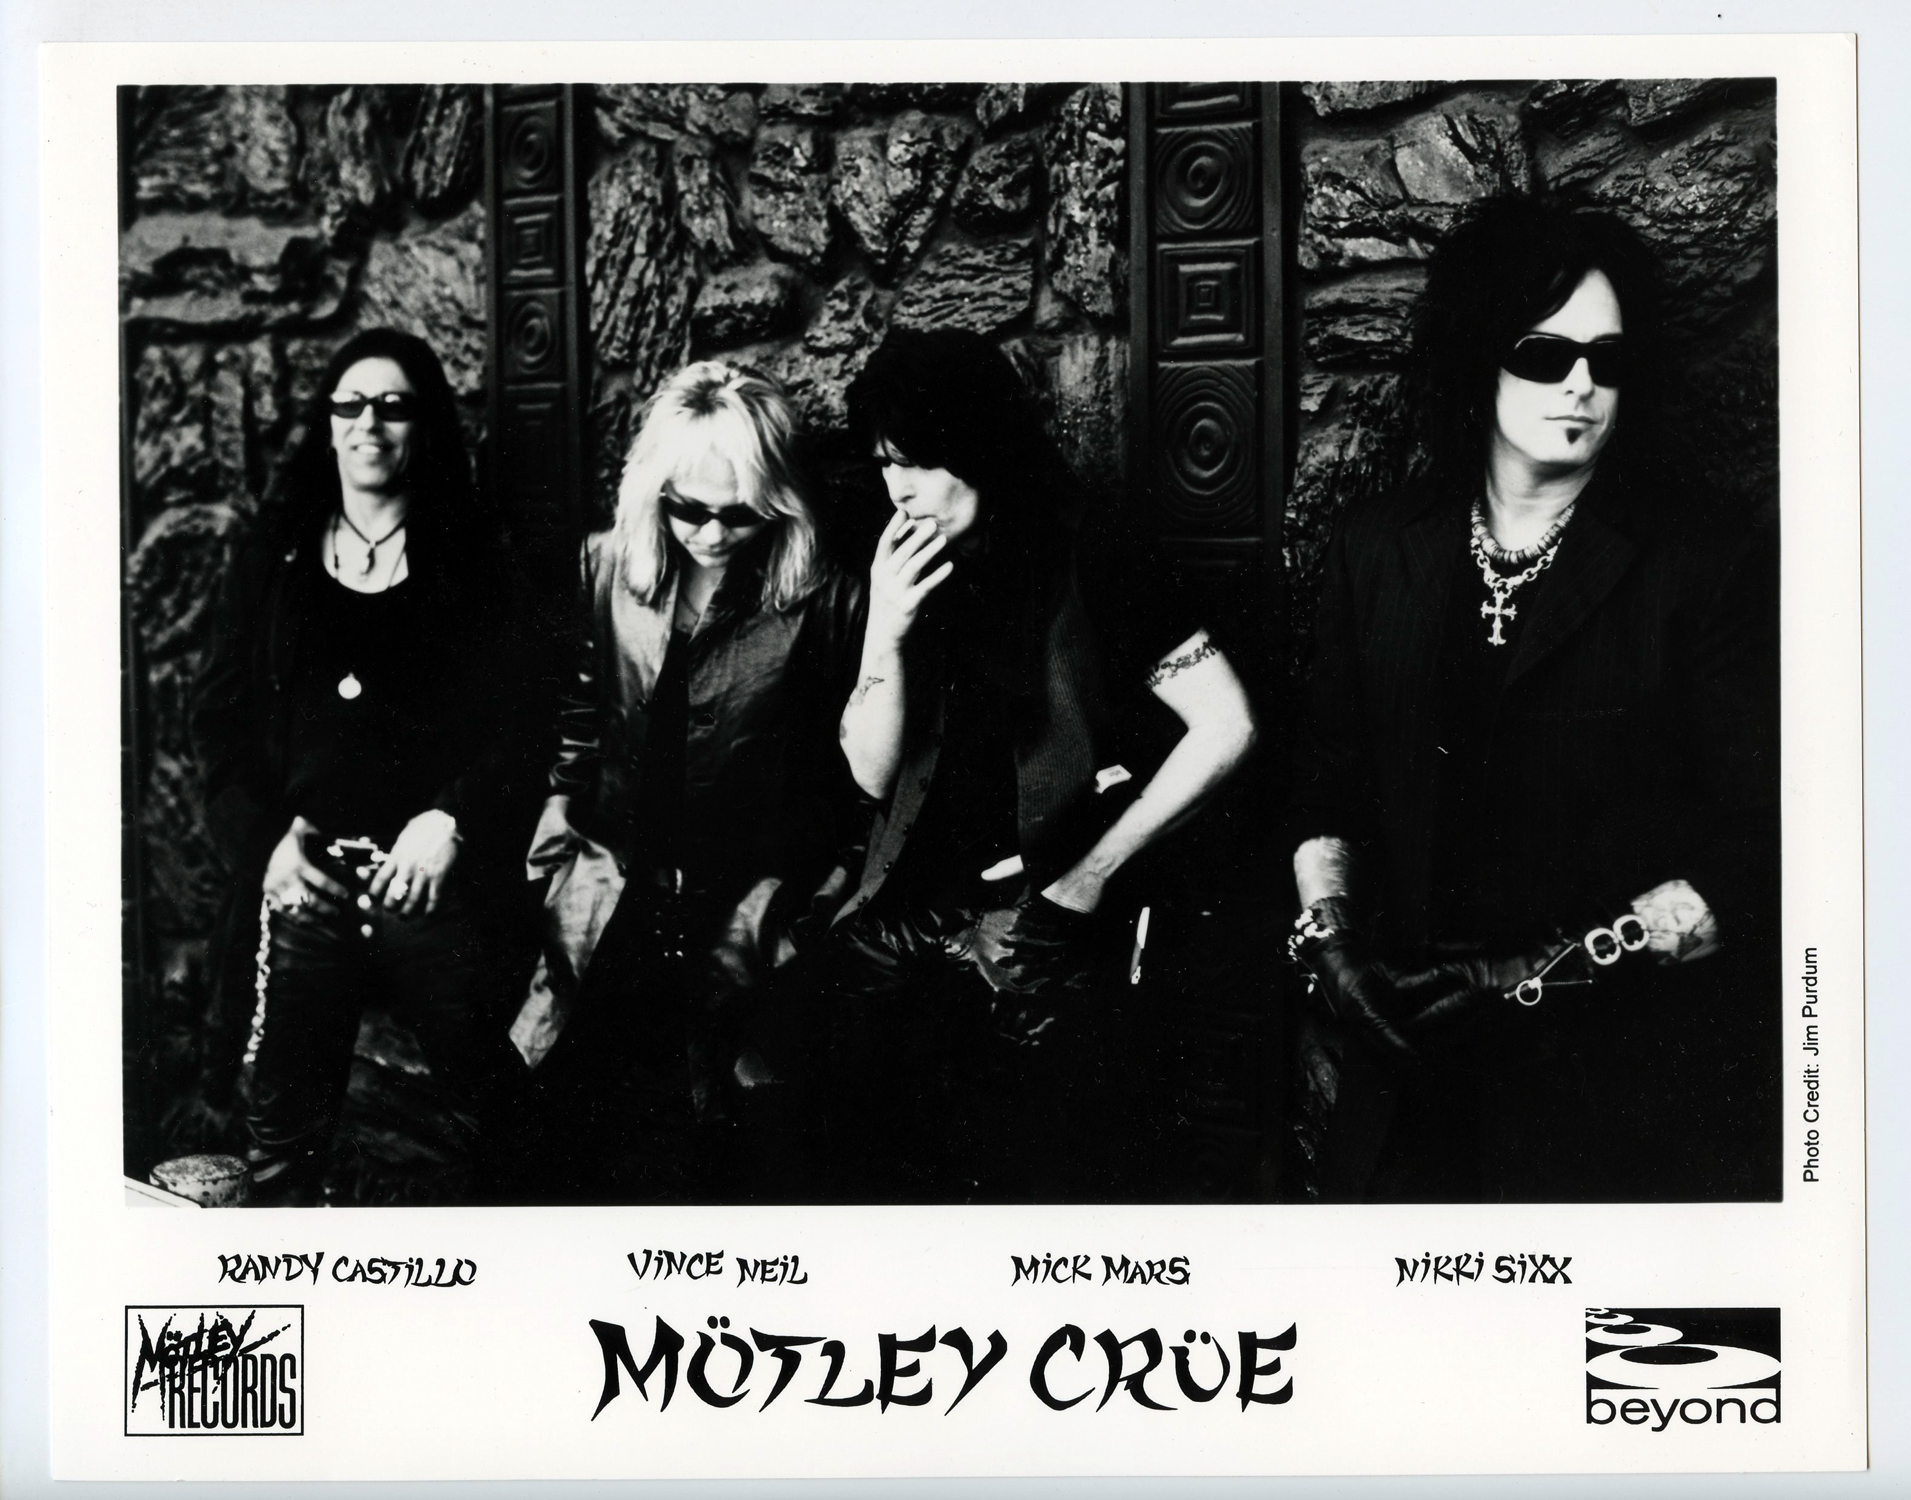 Motley Crue Photo 1999 Entertainment Or Death CD Release Promotion 